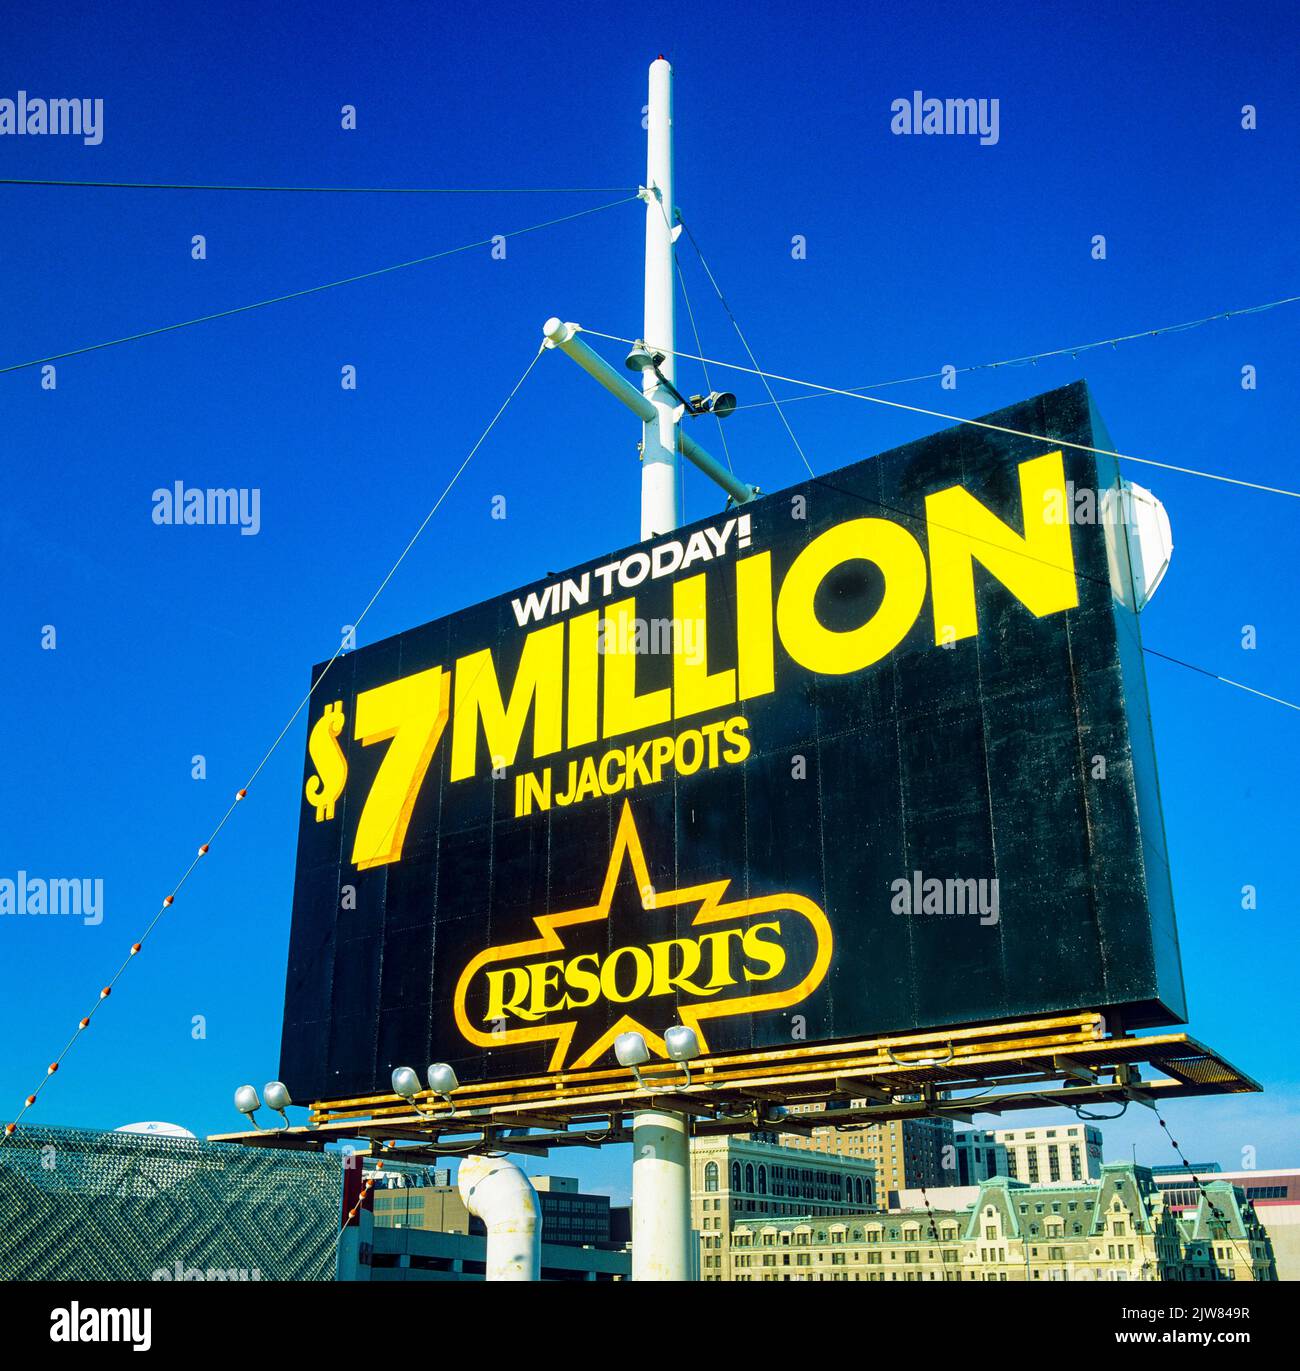 Atlantic City, 1980s, huge billboard, win today $ 7 Million in jackpots, casinos resorts, New Jersey state, NJ, USA, Stock Photo